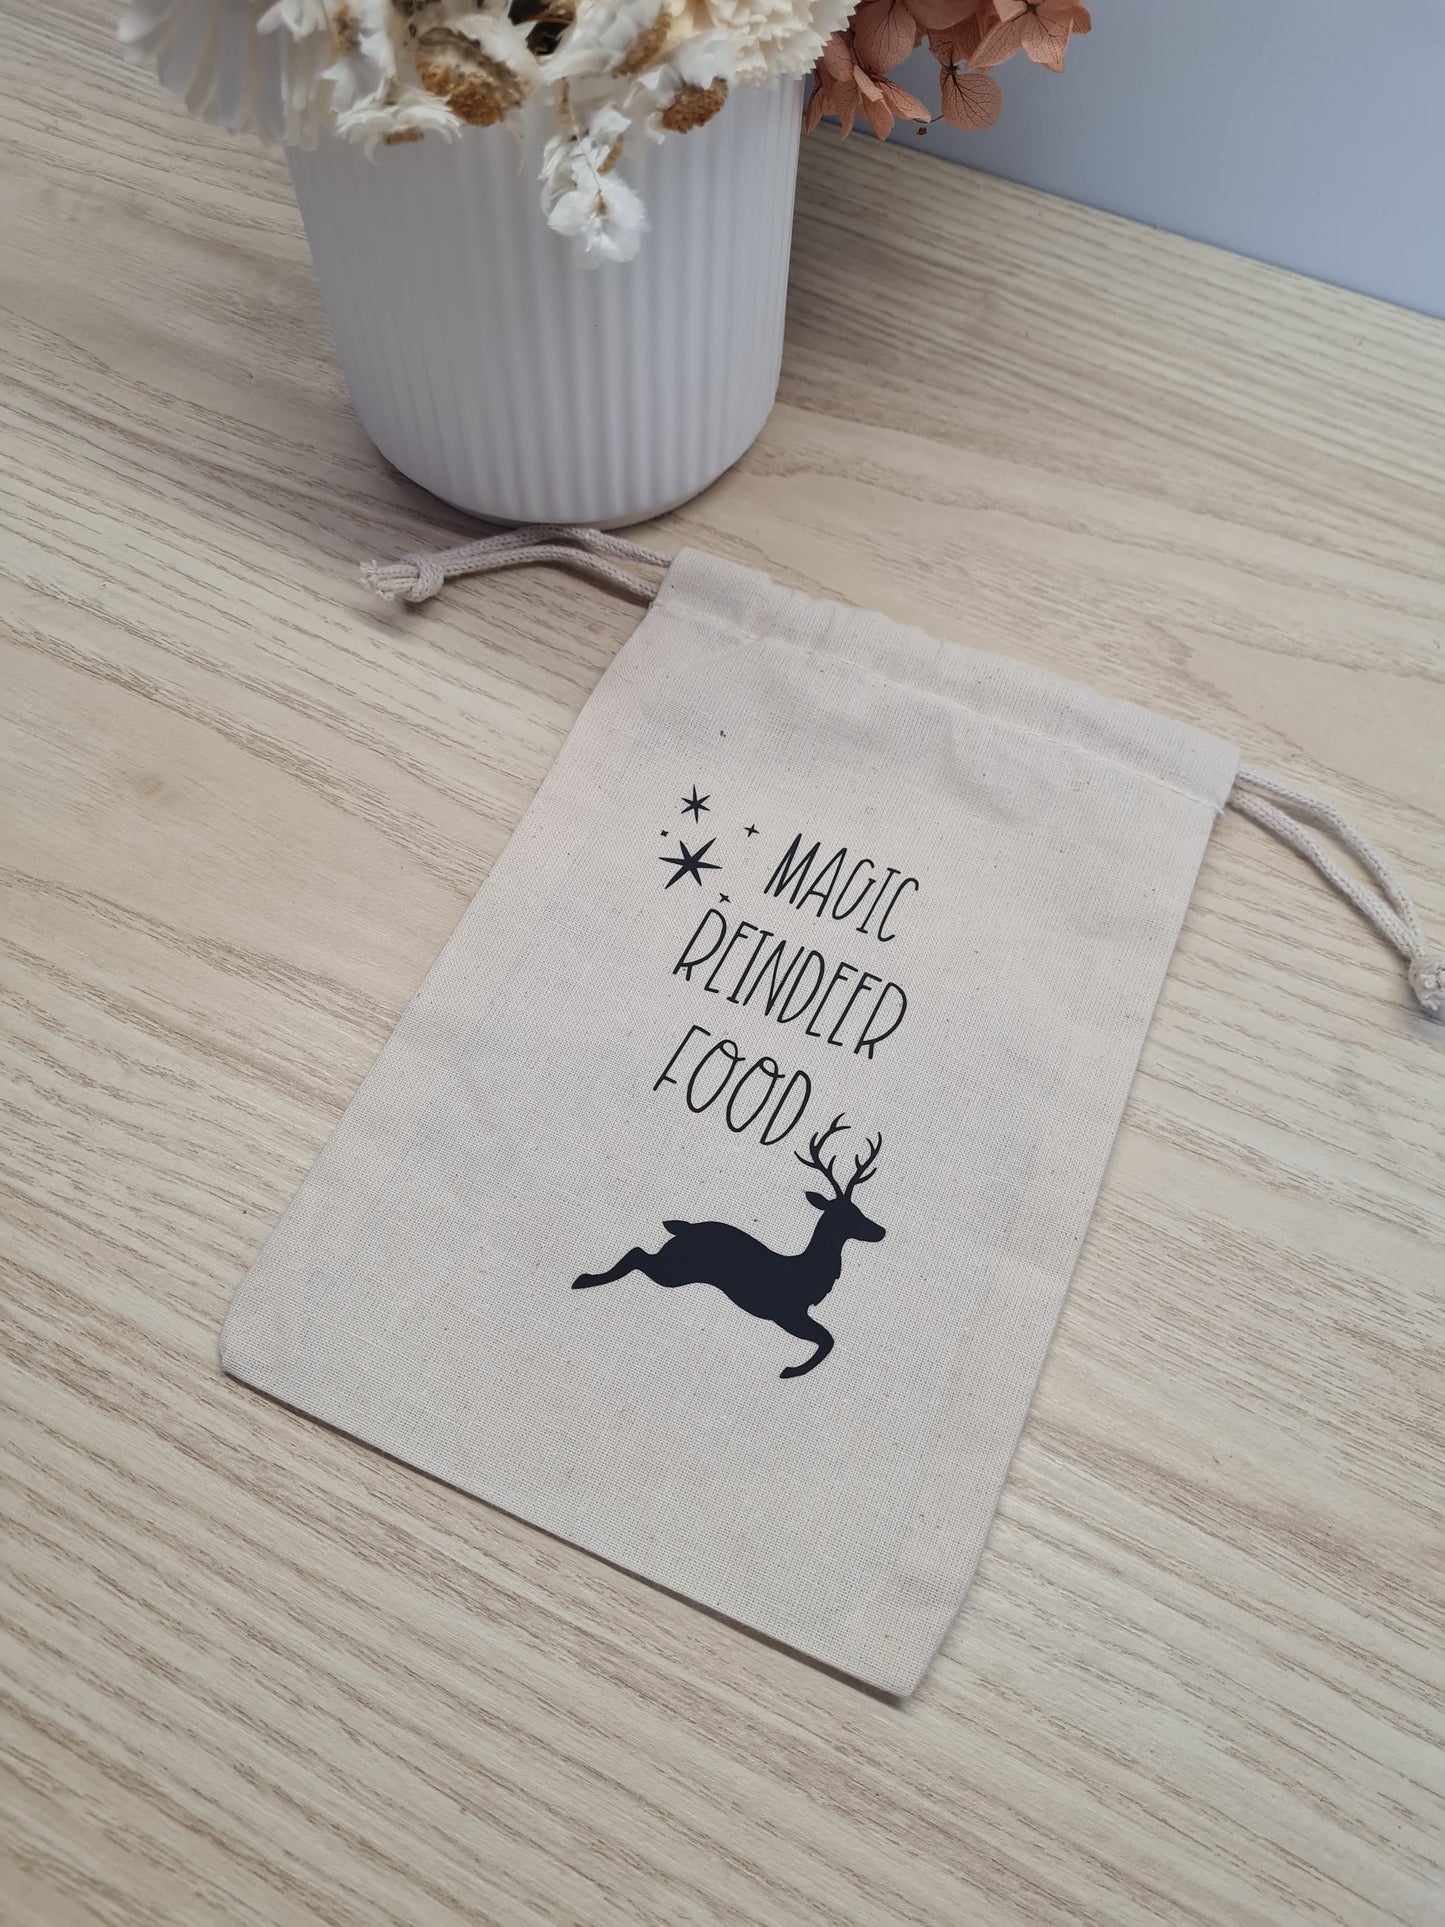 Magic Reindeer Food Bag